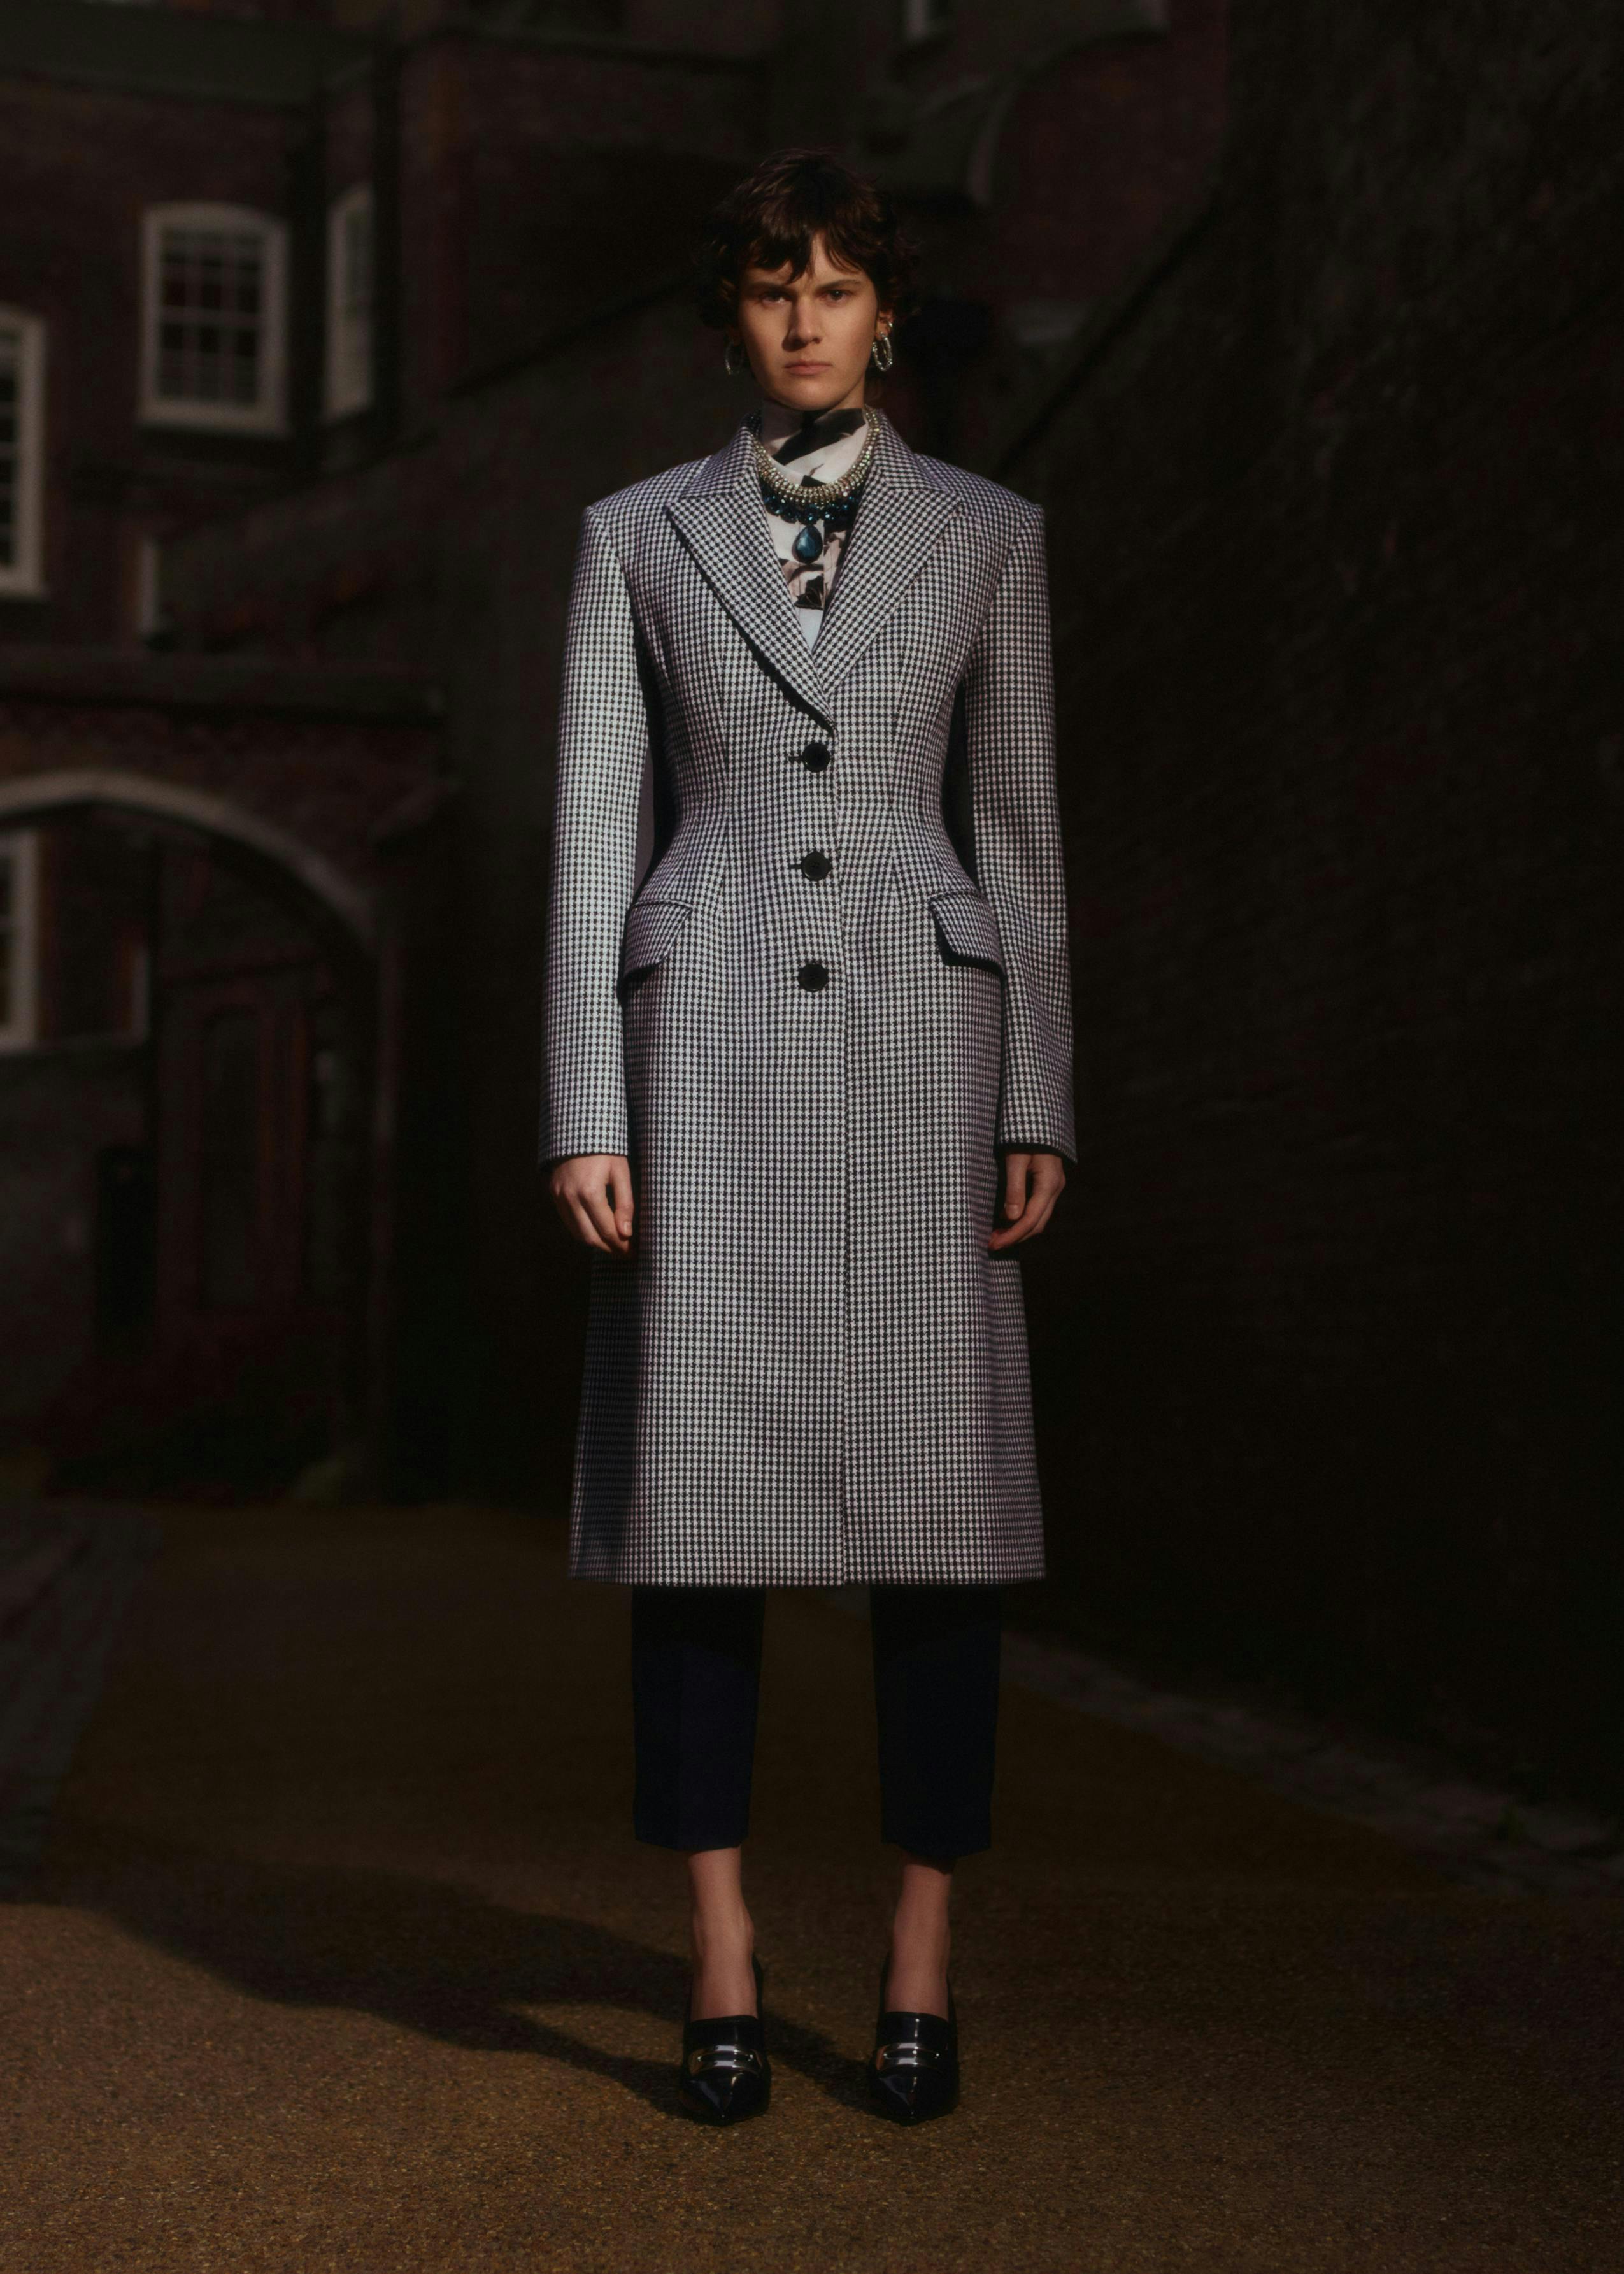 clothing apparel overcoat coat person human sleeve